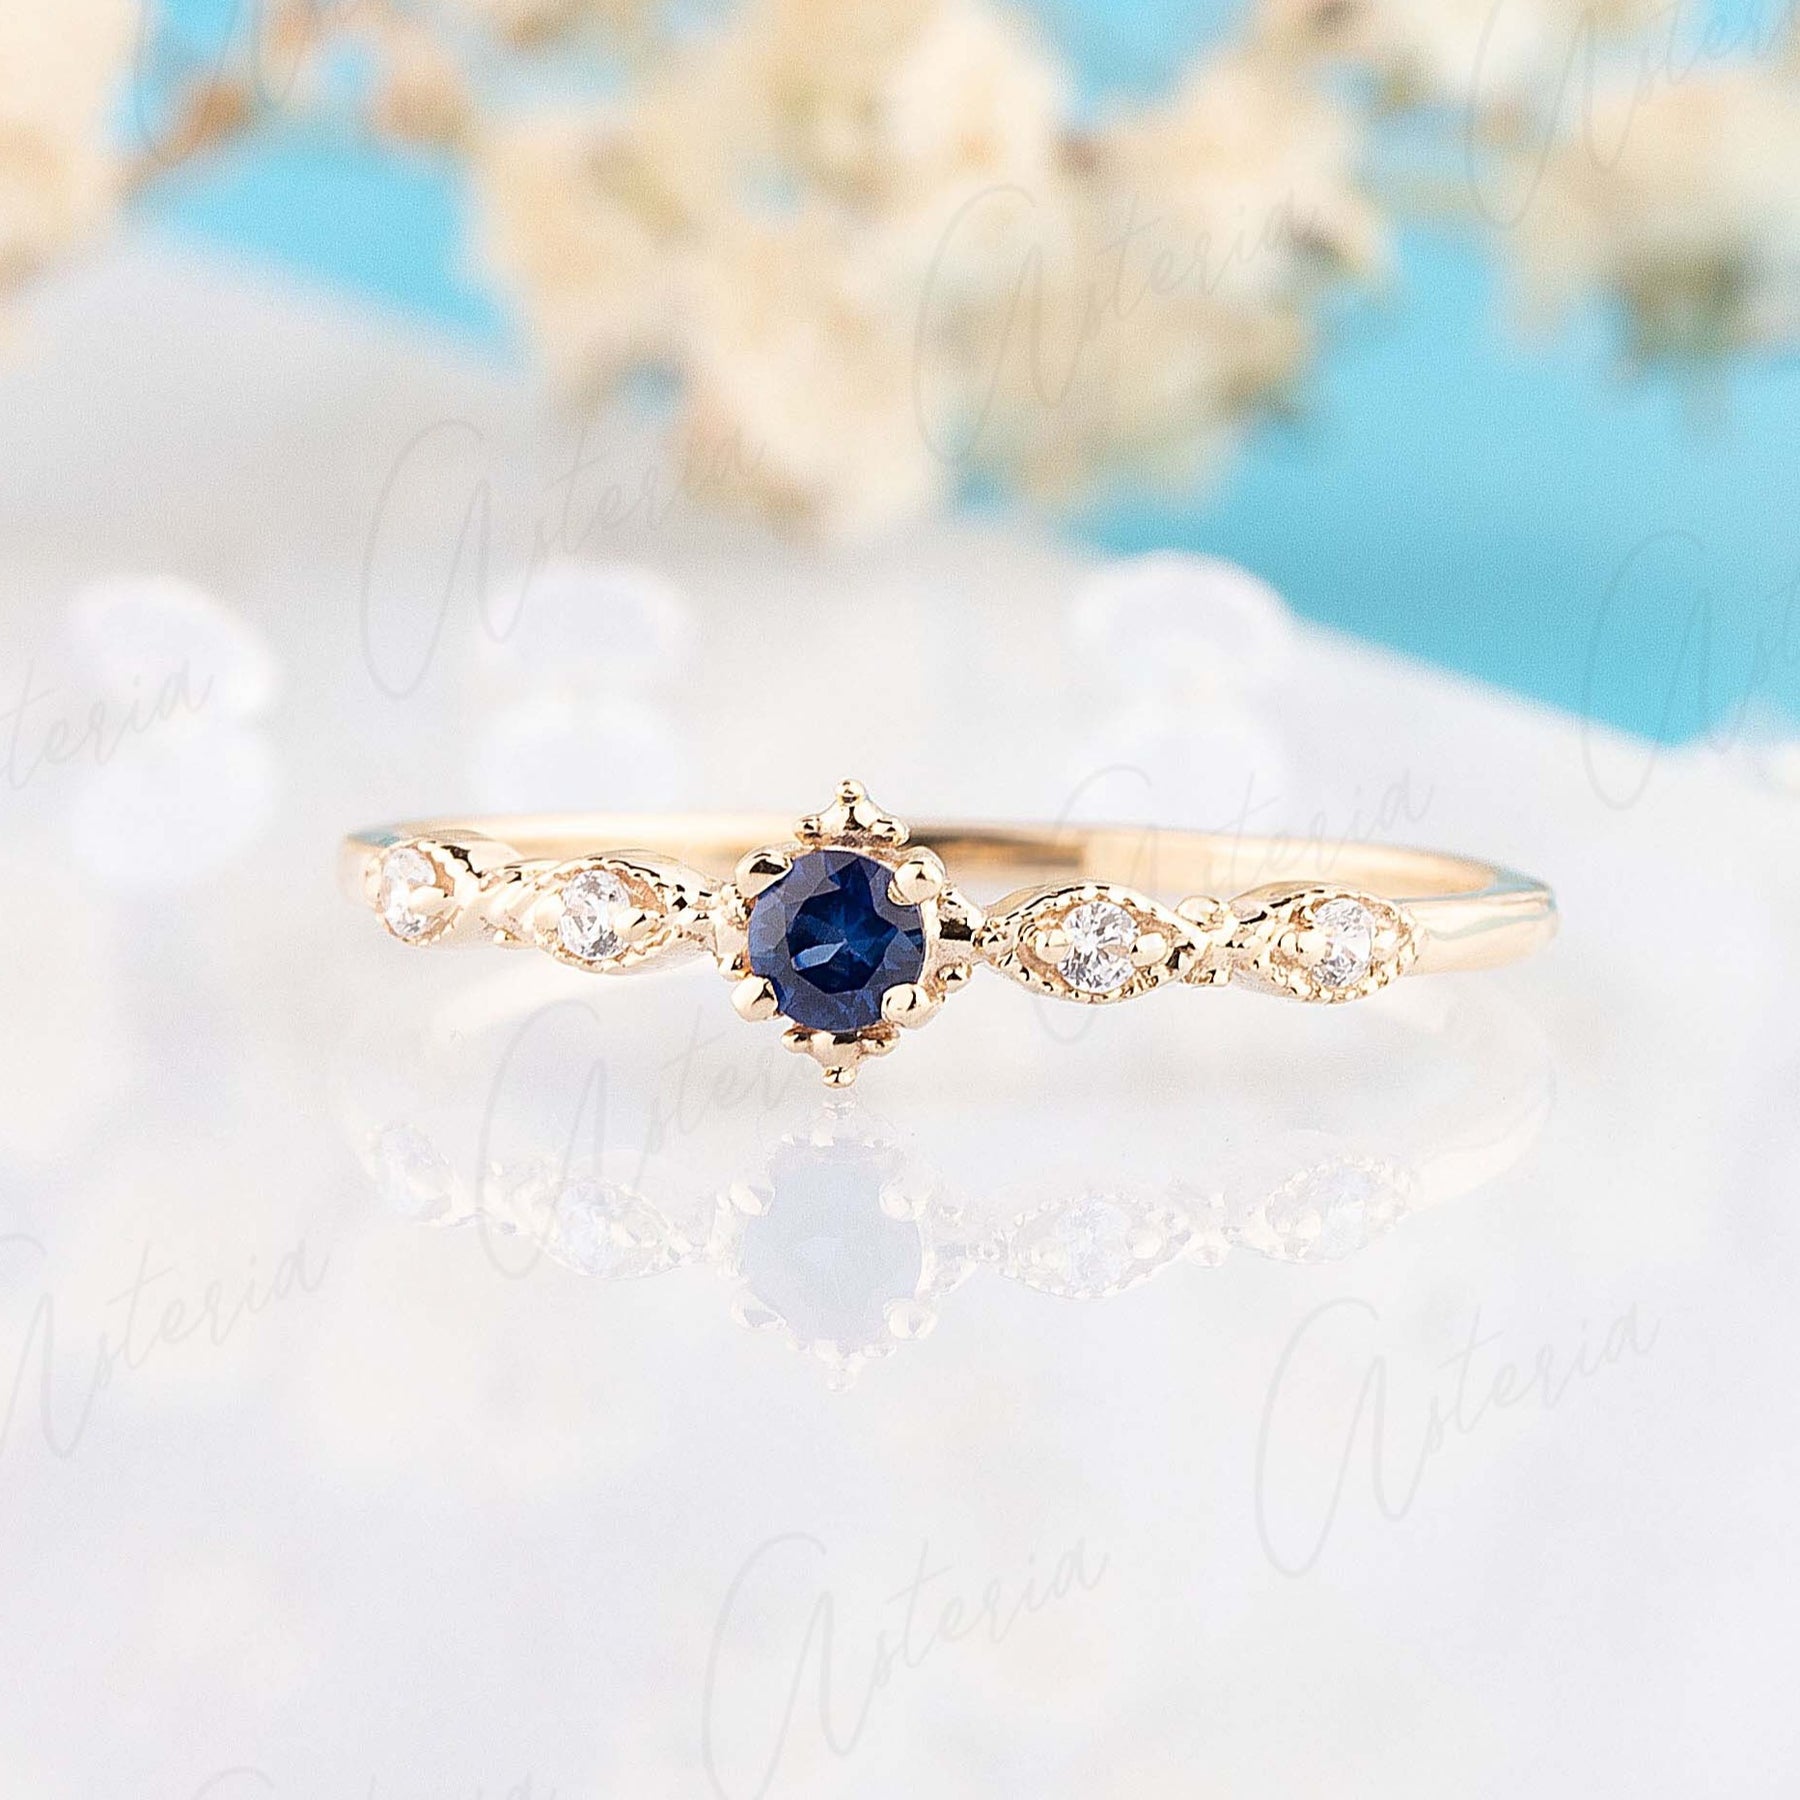 Blue Sapphire Diamond Ring - Magnificent Royal Blue Sapphire